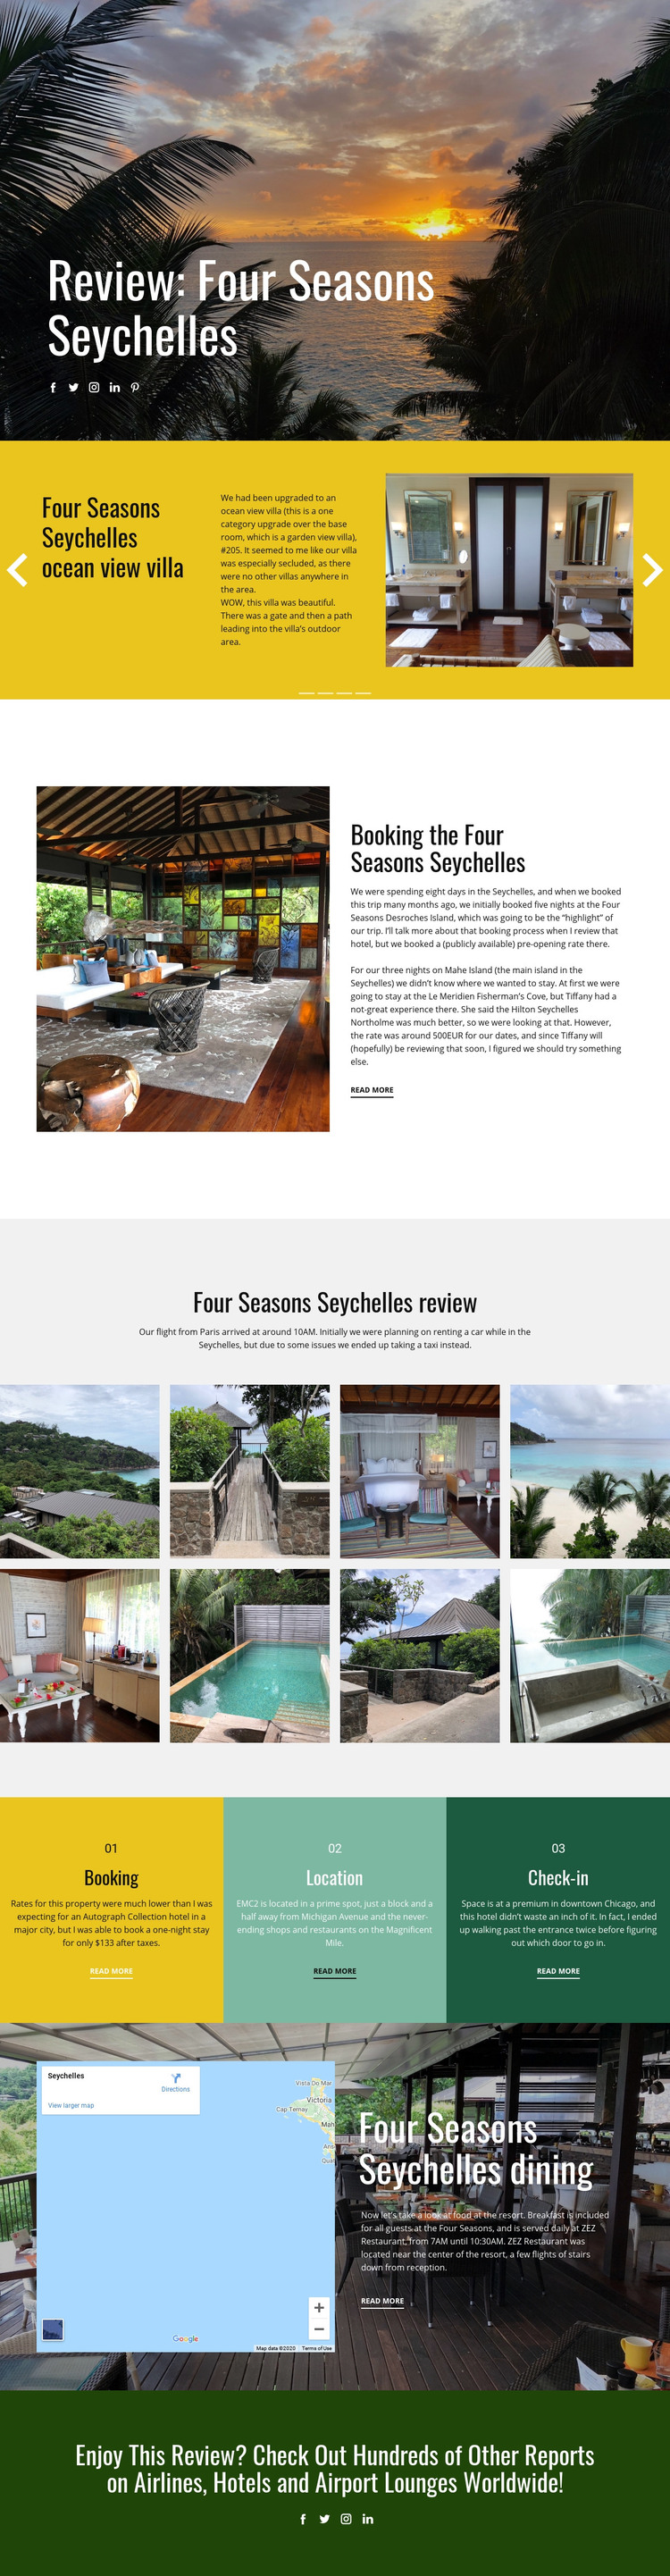 Four Seasons Homepage Design